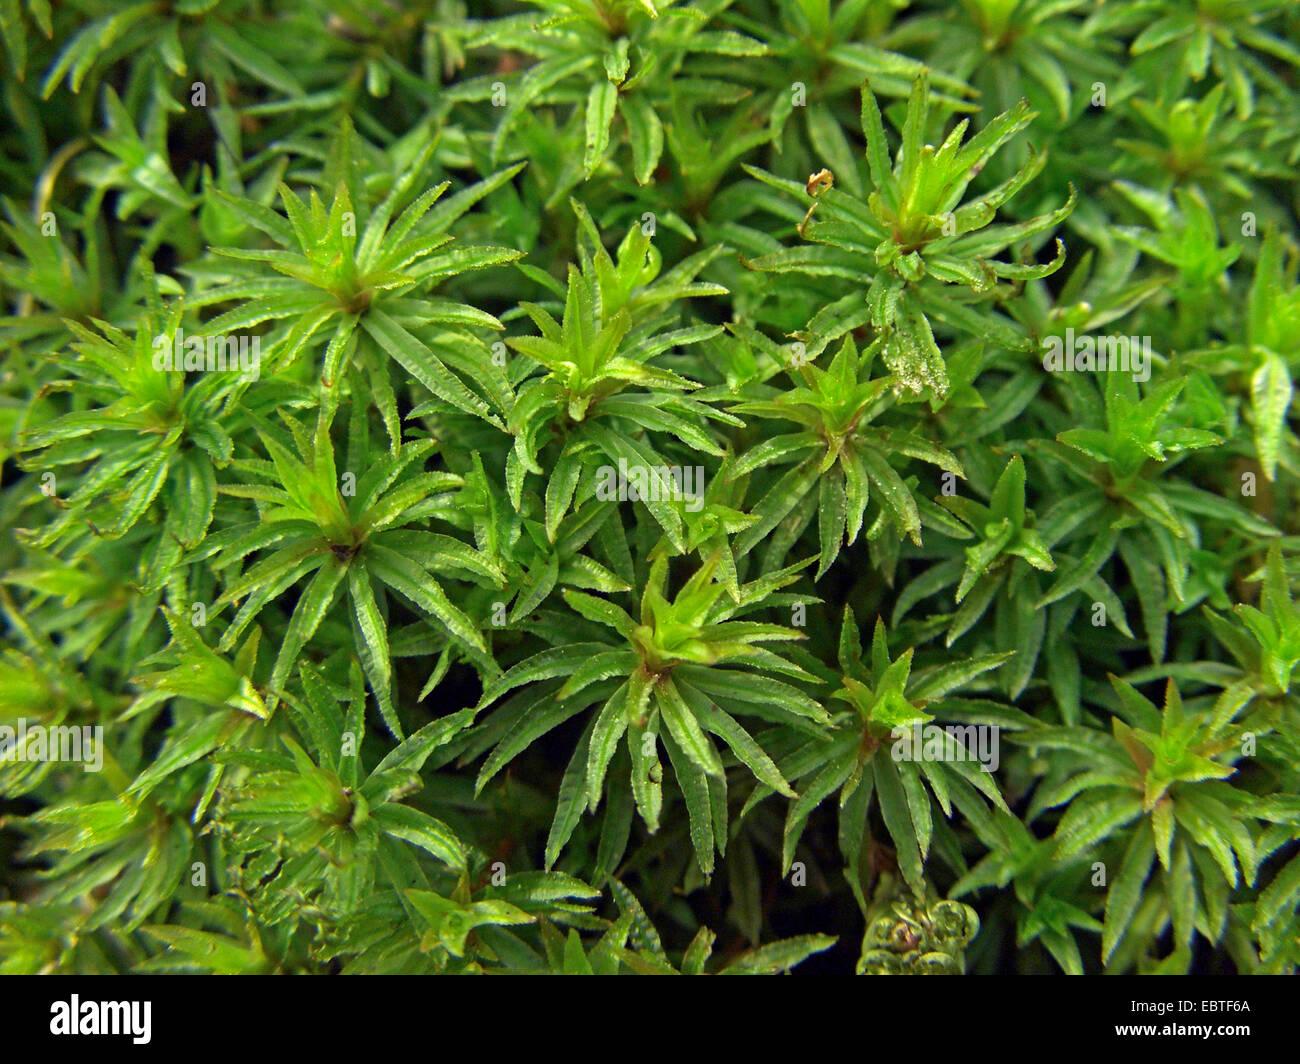 catherines-moss-atrichum-undulatum-sprouts-germany-north-rhine-westphalia-EBTF6A.jpg